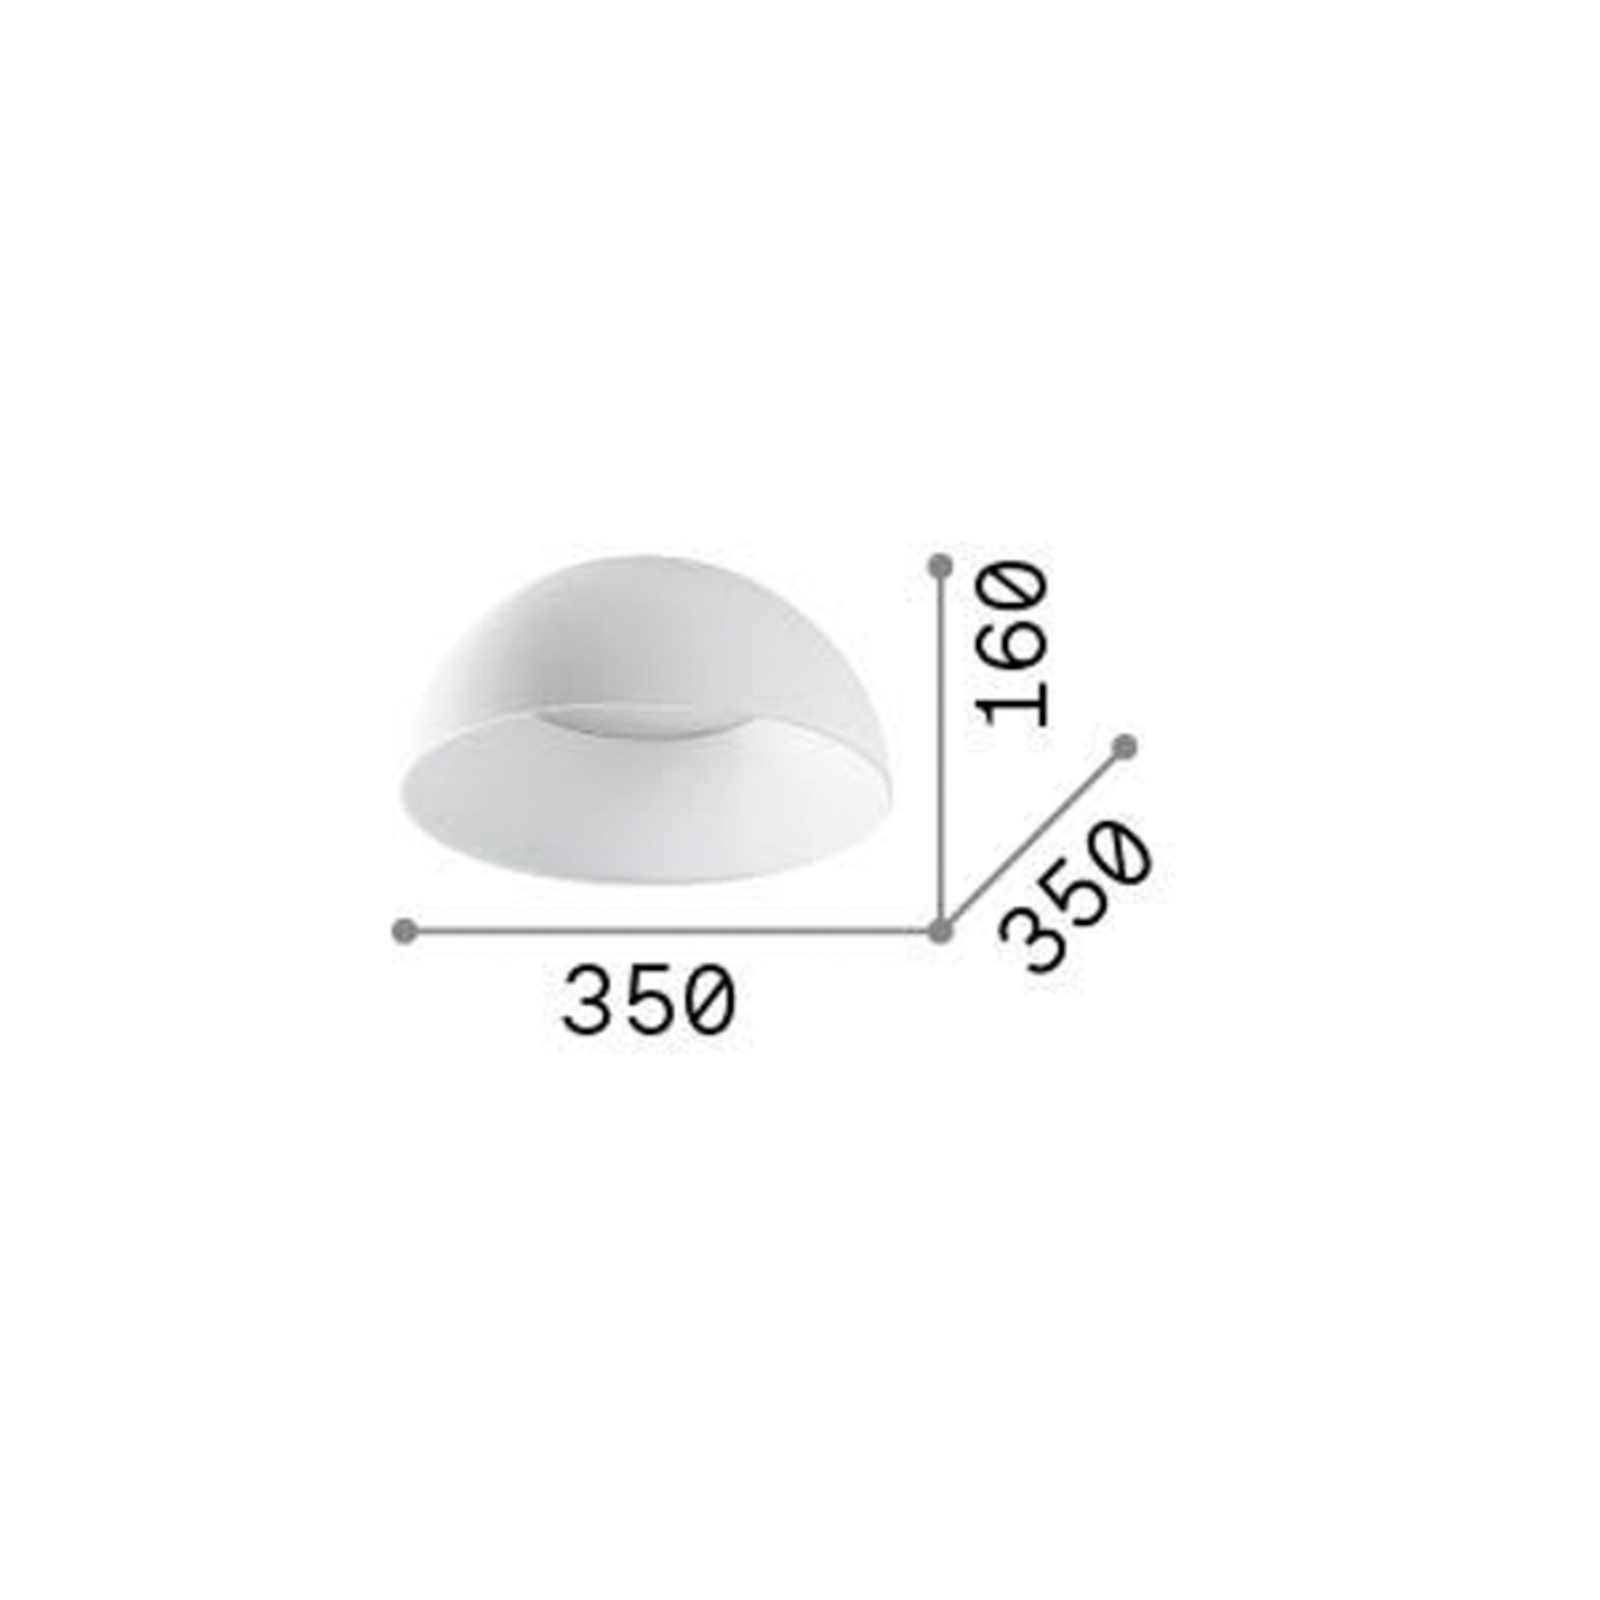 Ideal Lux LED ceiling light Corolla-1, white, metal, Ø 35 cm